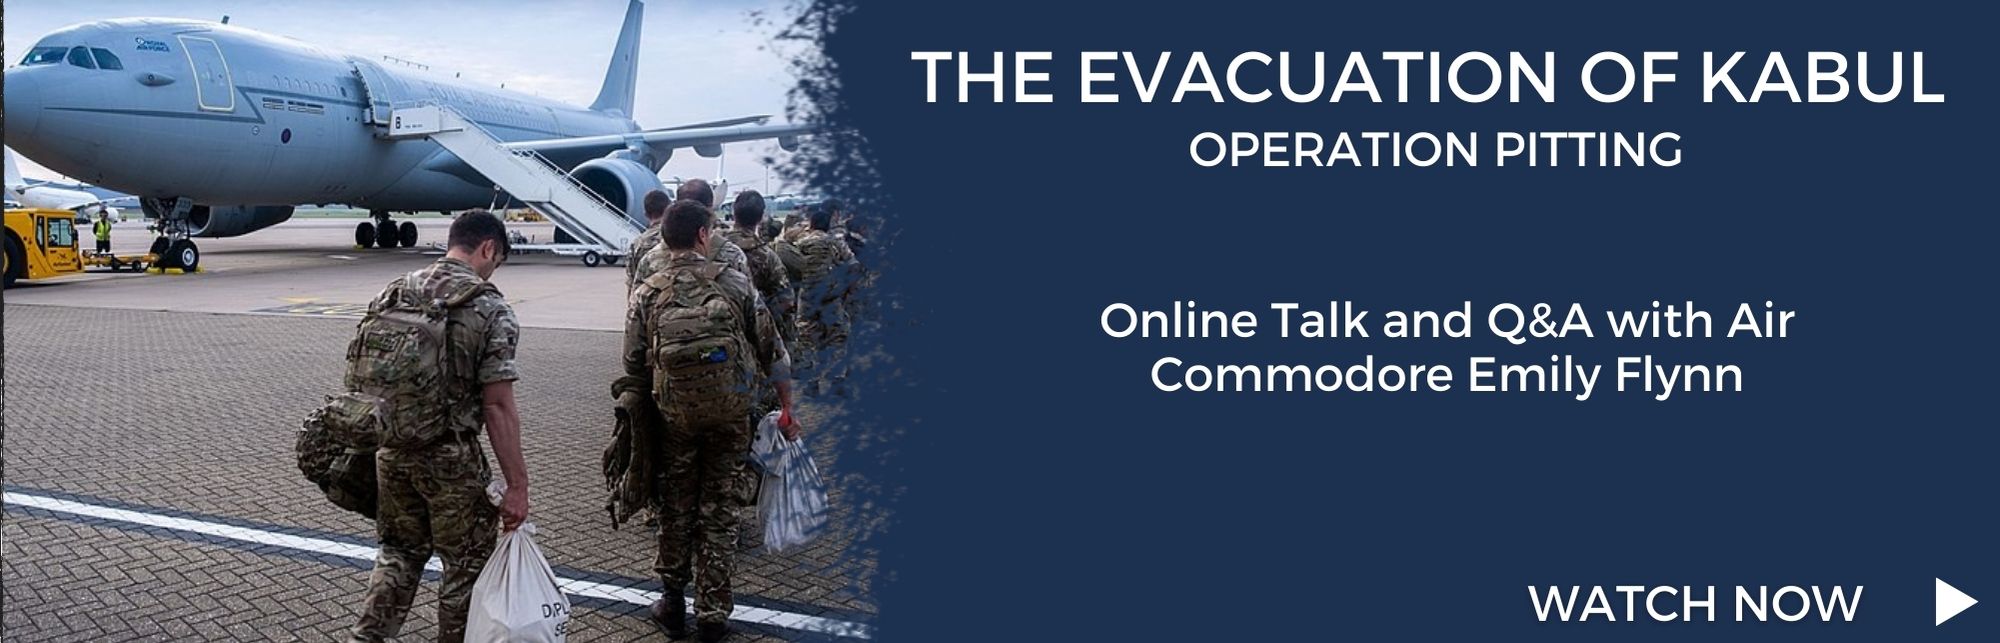 Watch Now: Evacuation of Kabul Online Talk